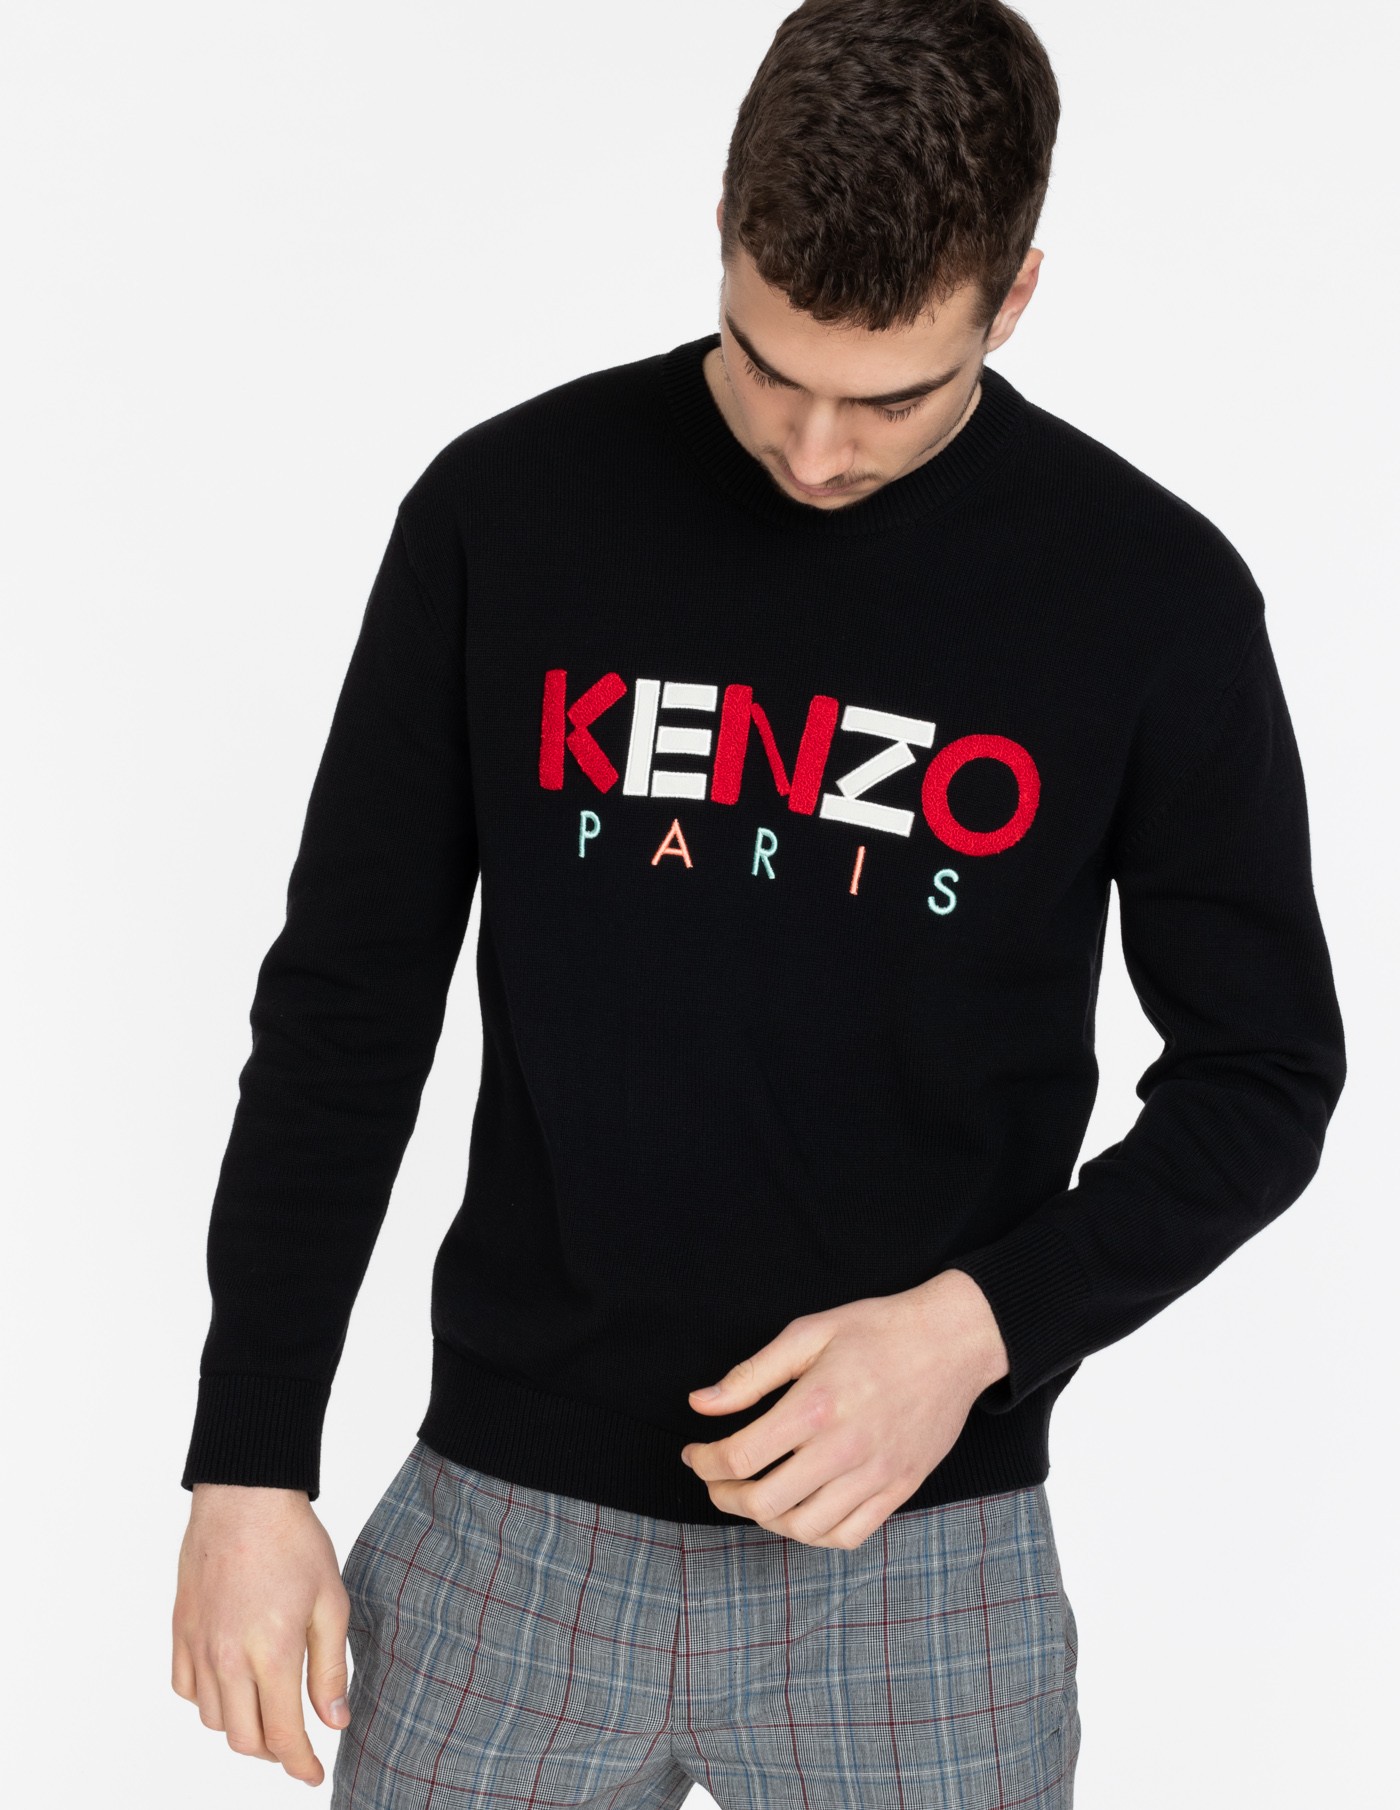 Kenzo - Pullover Kenzo Paris Black